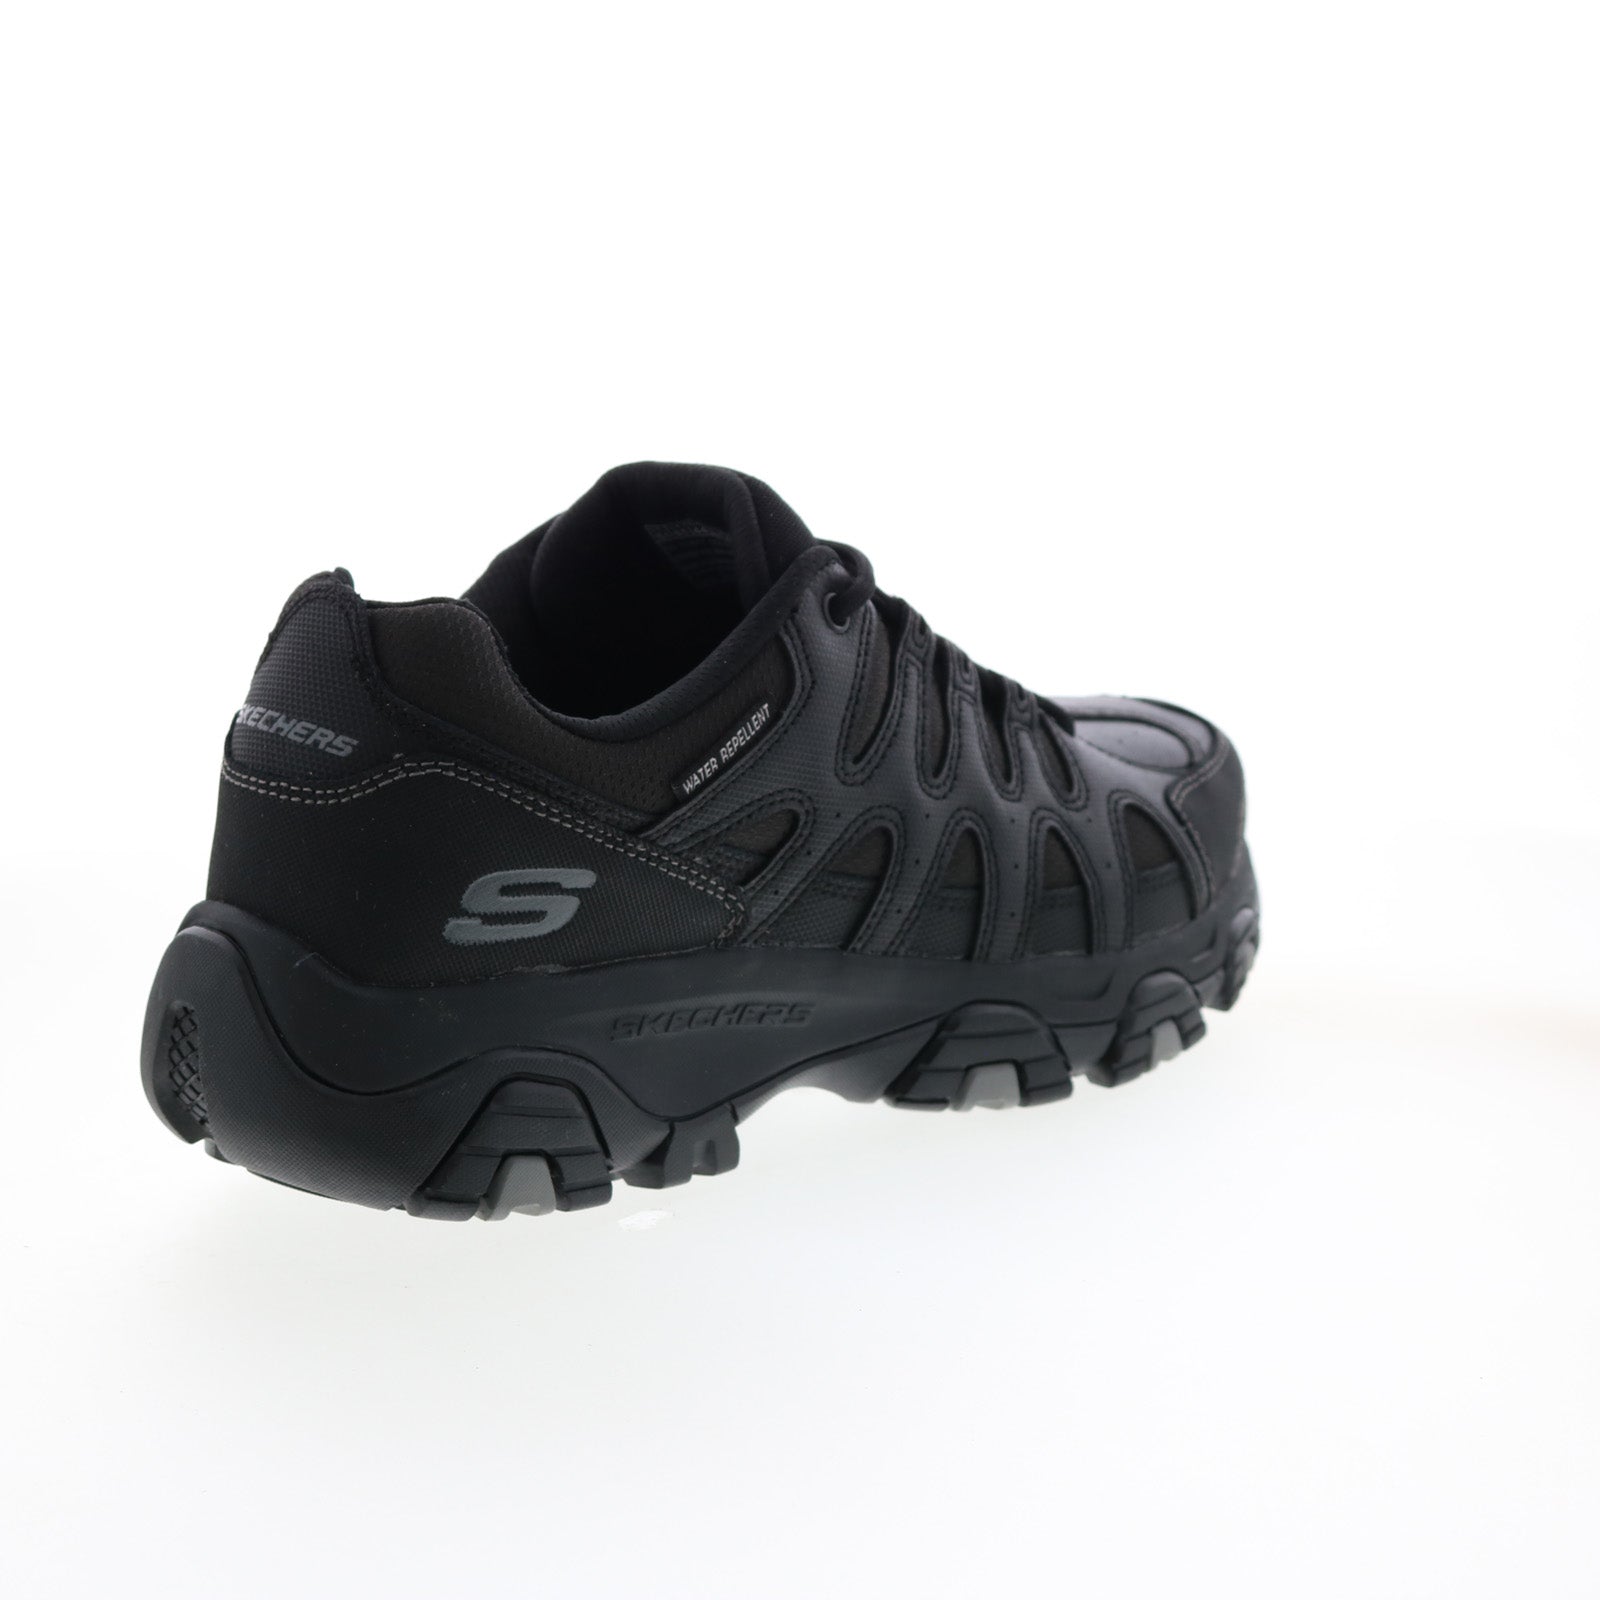 Skechers Terrabite Mens Black Dellga Leather Hiking - Sho Shoes 51847 Ruze Athletic